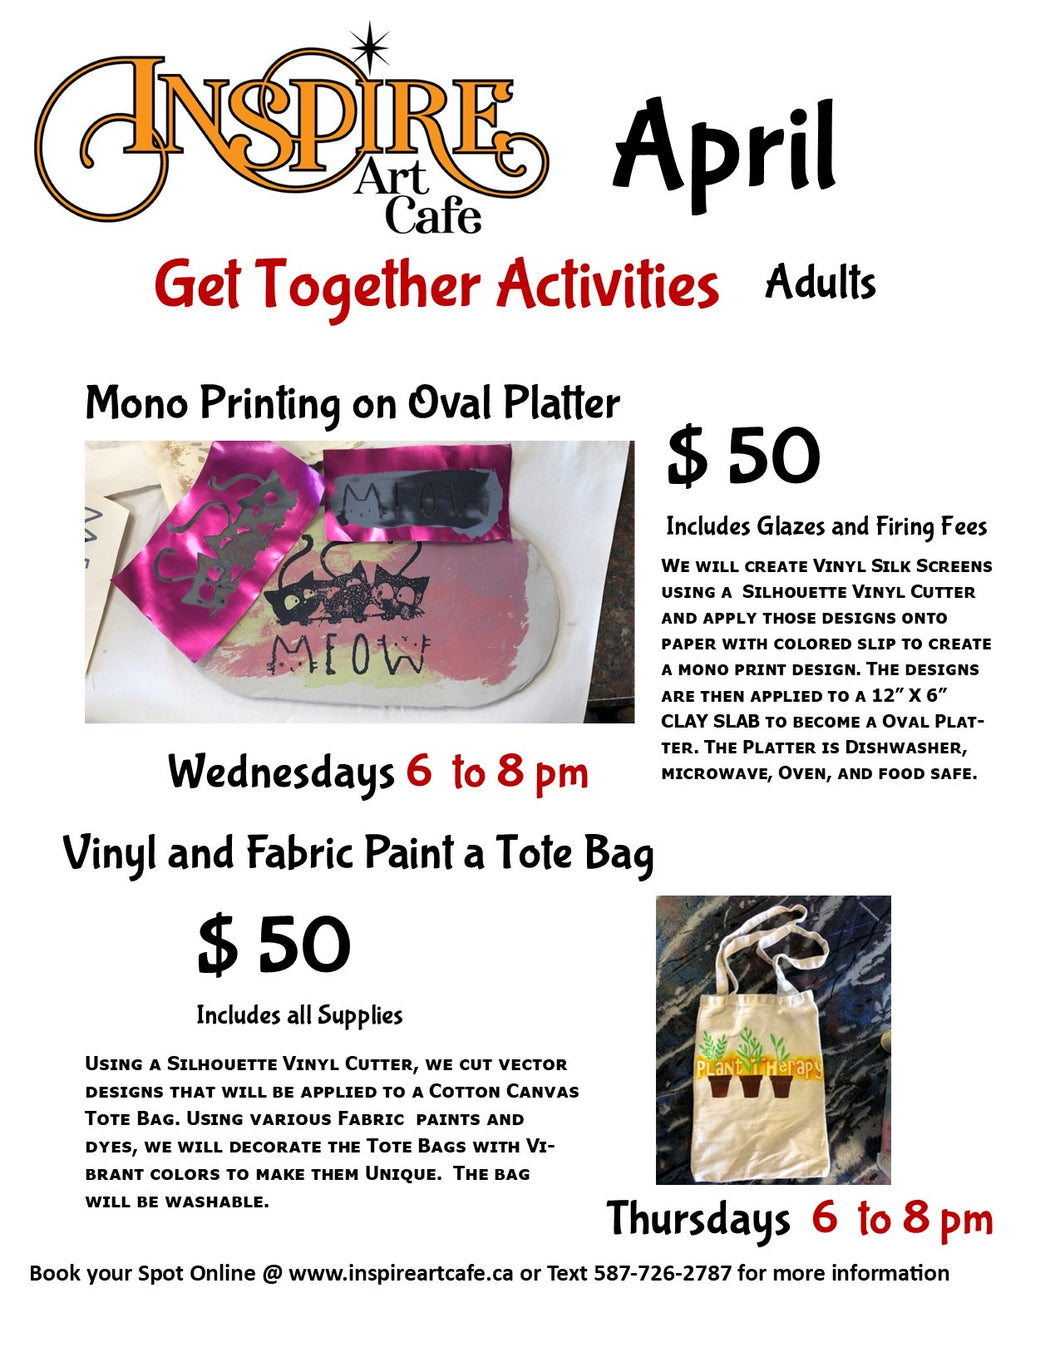 Get Together Activity Mono Print on Oval Platter April 17